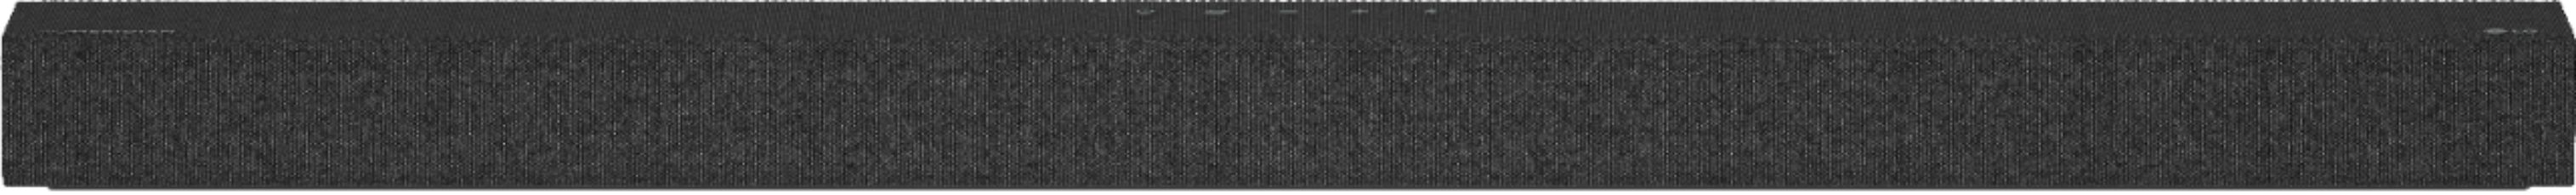 Back View: Peerless-AV - SmartMount Tilt Display Wall Mount For Most 46" - 90" Flat Panel Displays - Semi-gloss Black